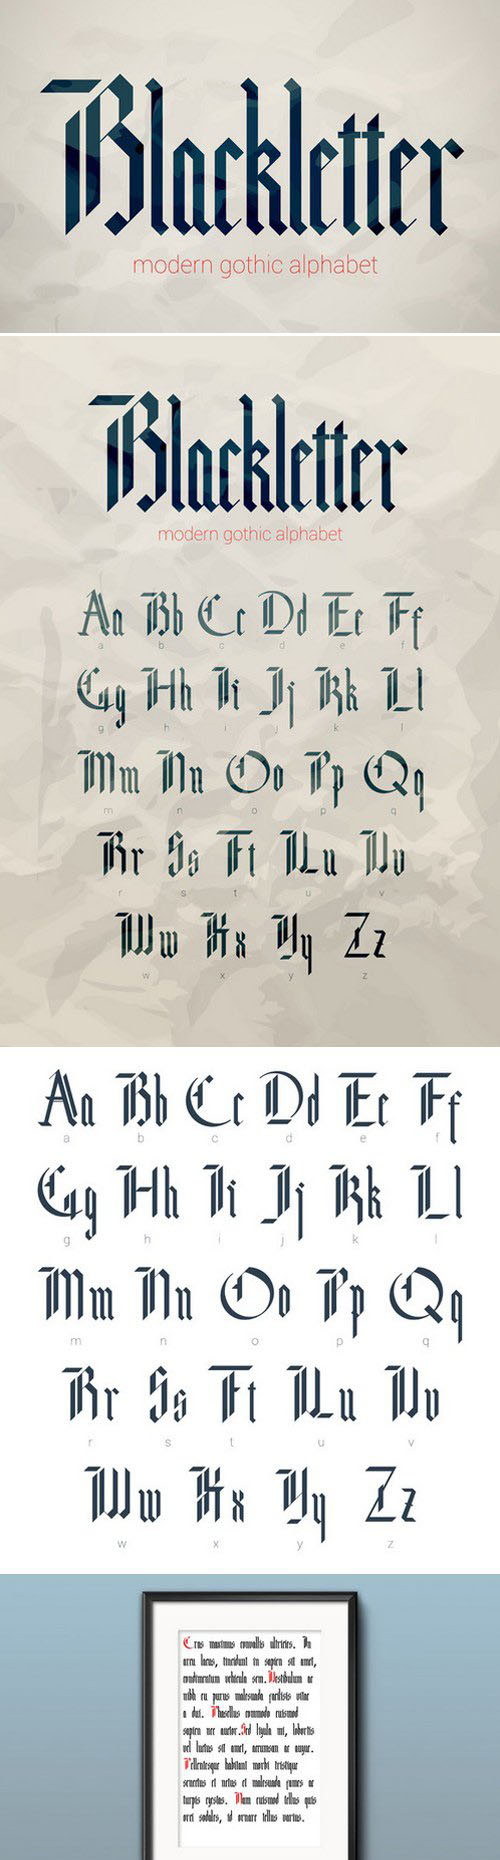 CM - Blackletter modern gothic font.